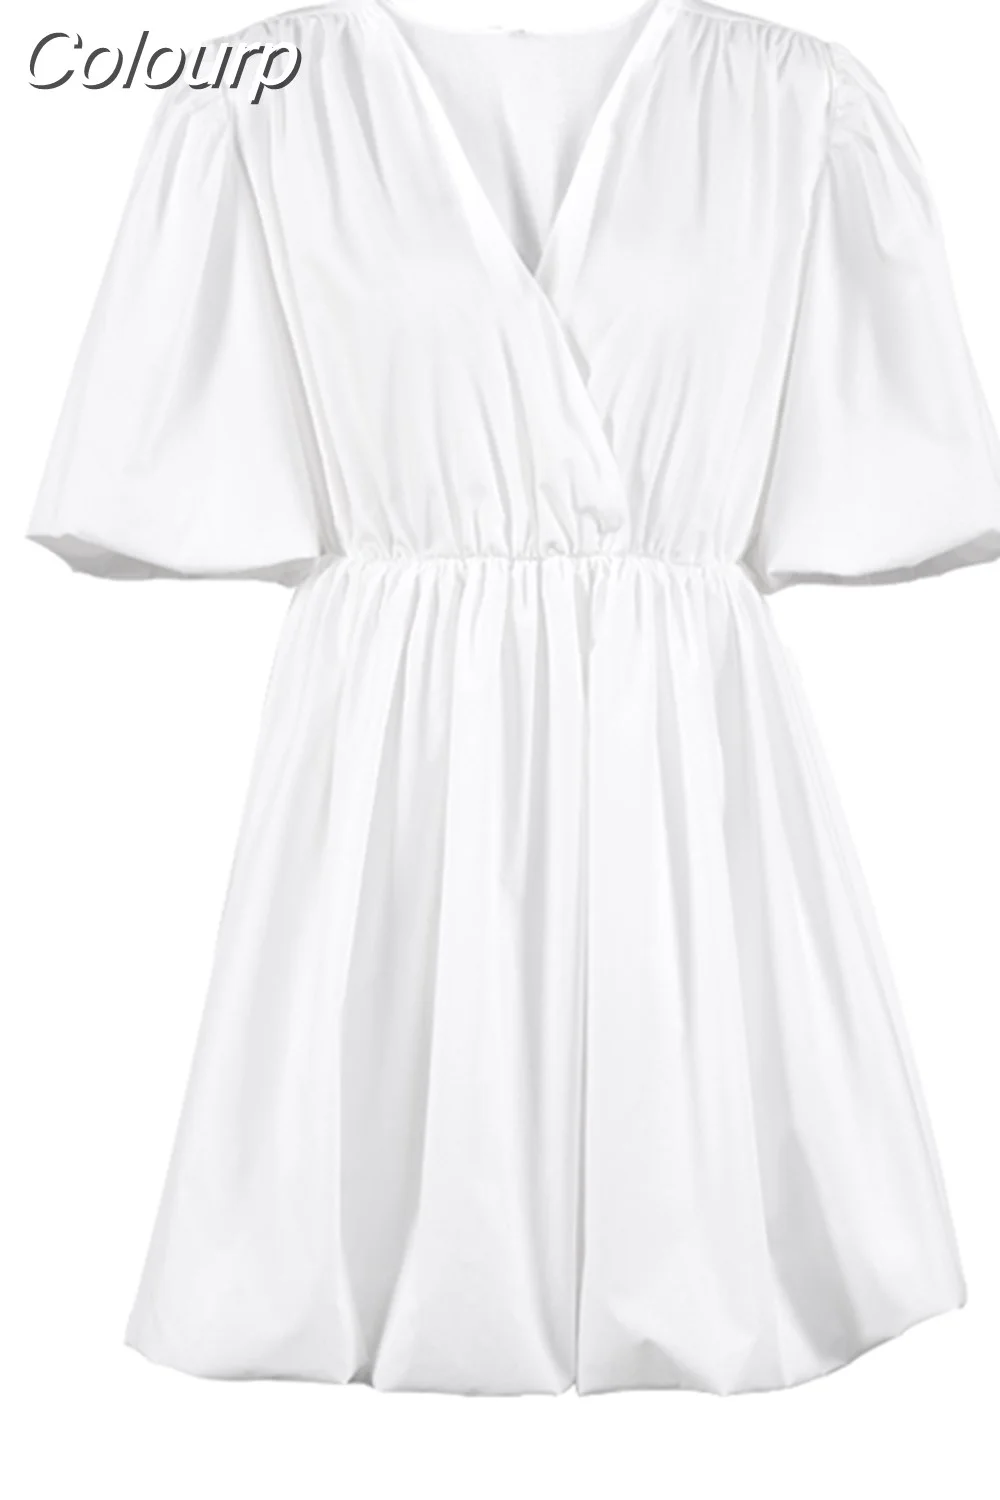 Colourp Fashion Casual Short Dresses Women 2023 Lantern Sleeve V-Neck Sexy White Dress Summer Elegant Pleated A-Line Female Dress